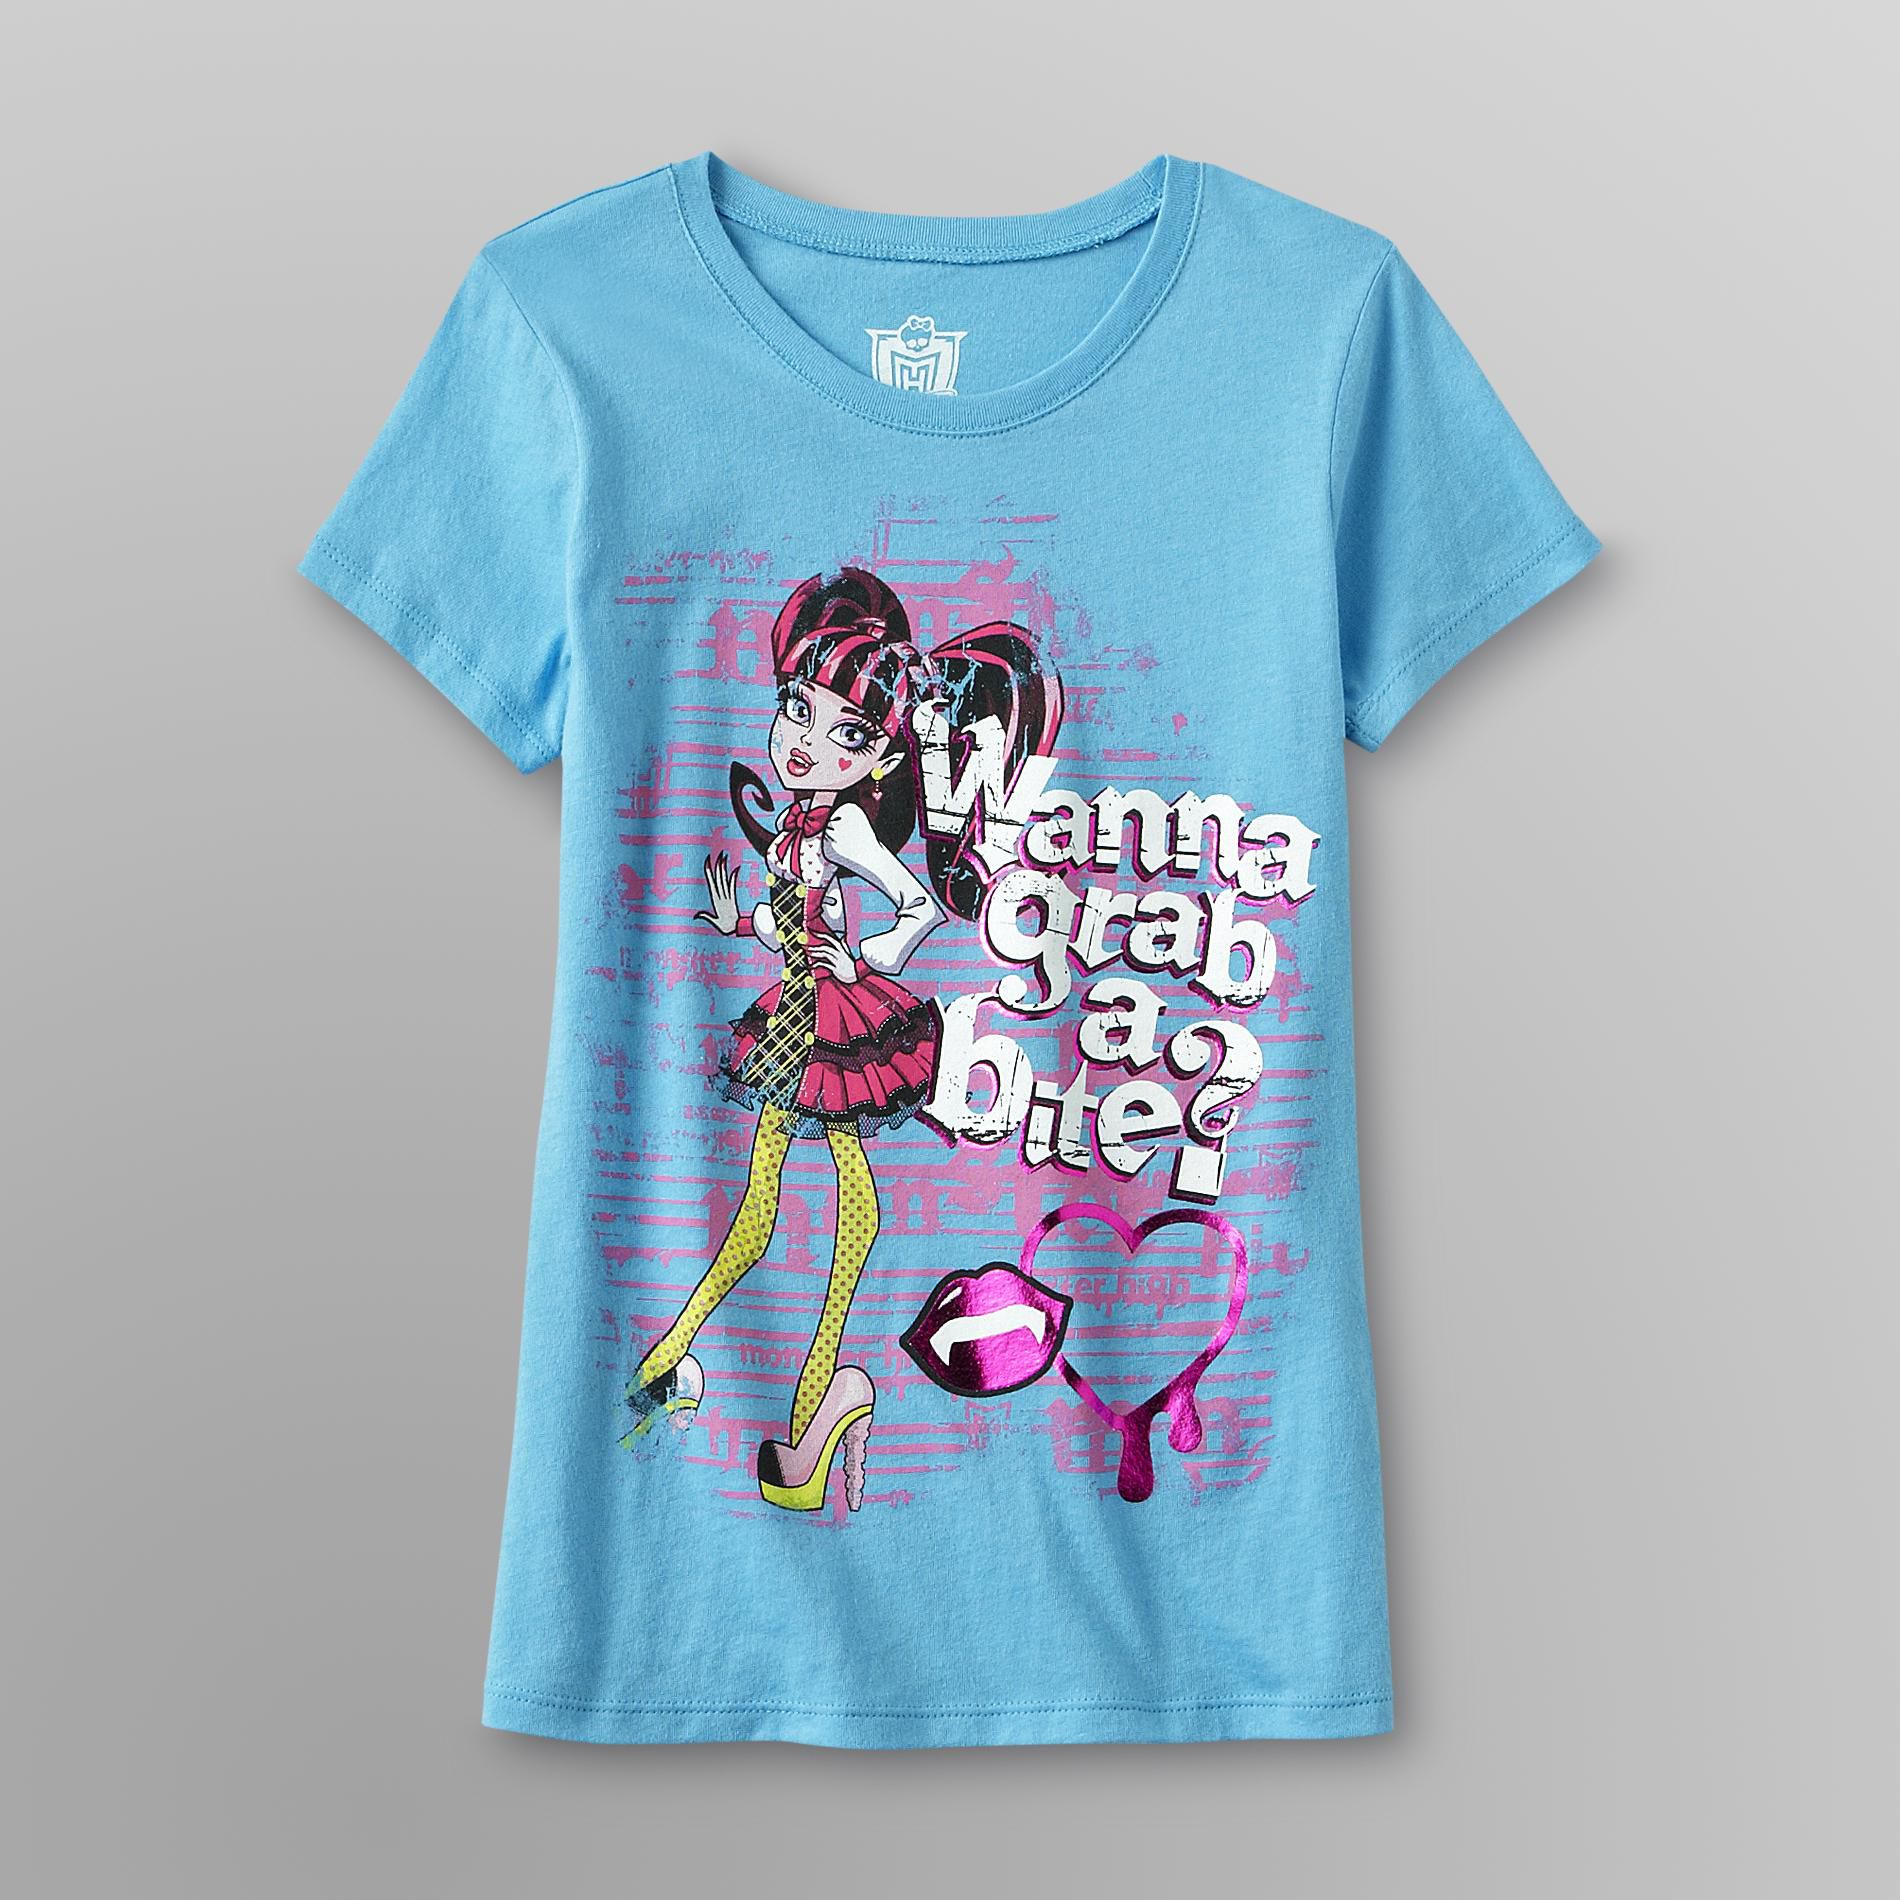 Monster High Girl's Graphic T-Shirt - Draculaura